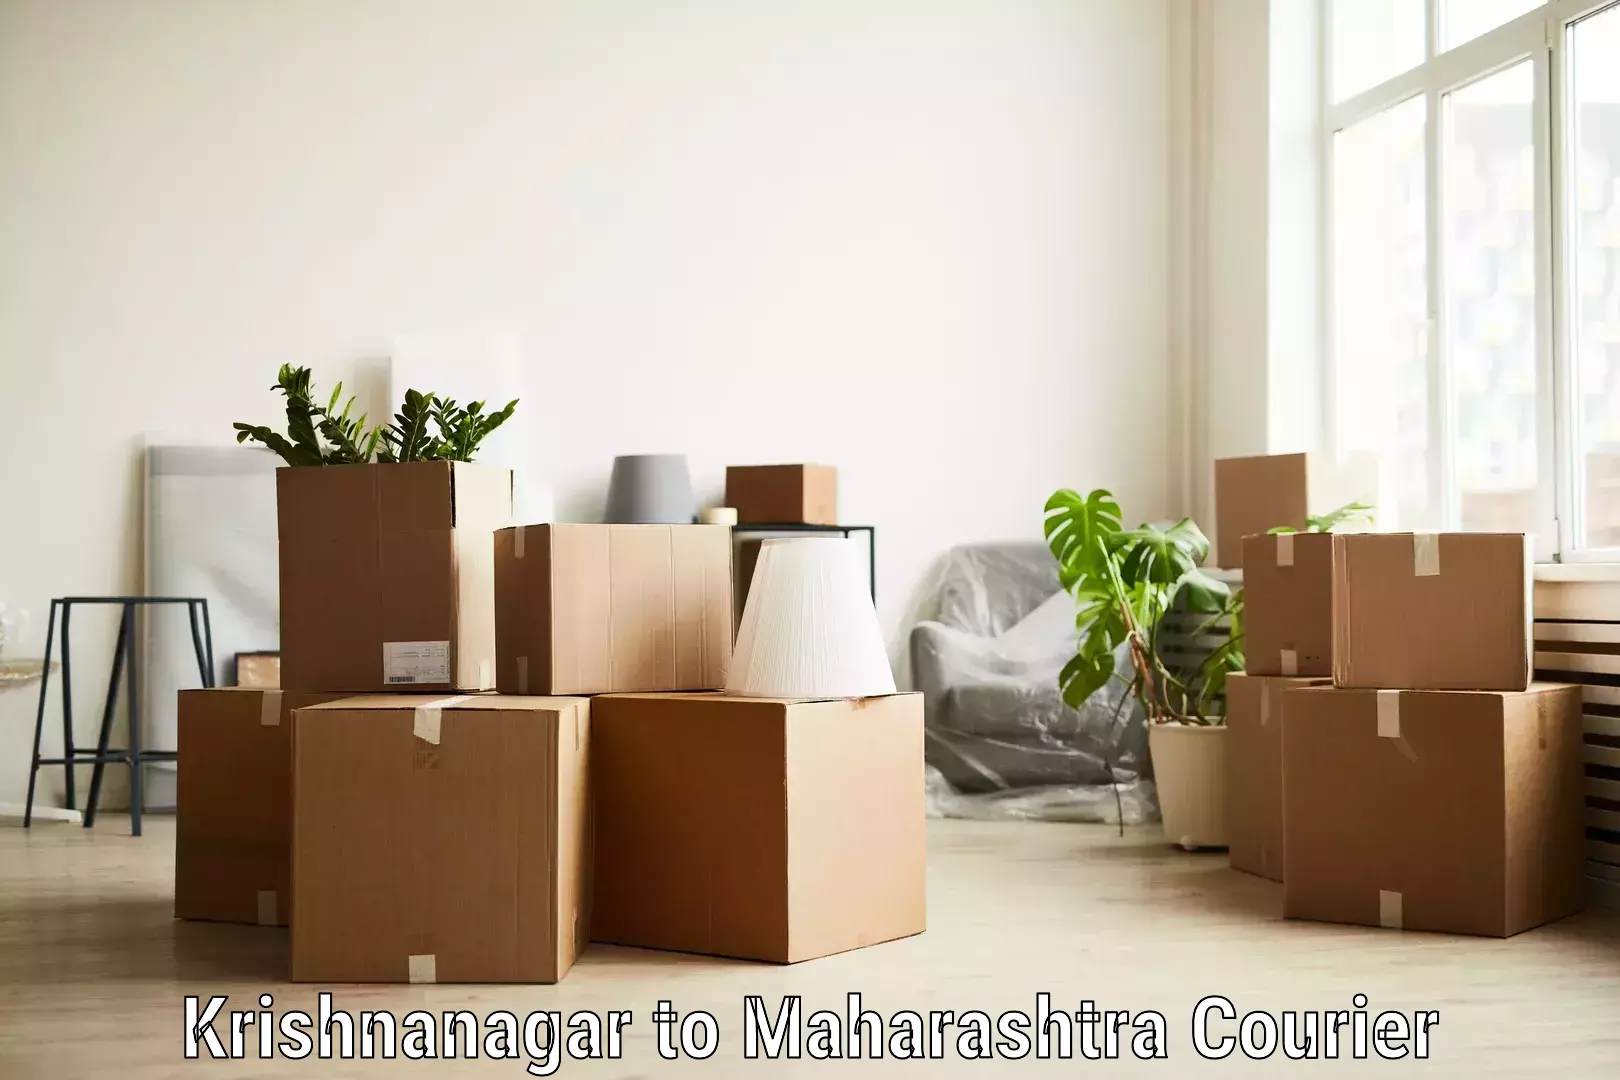 Lightweight parcel options Krishnanagar to Brahmapuri